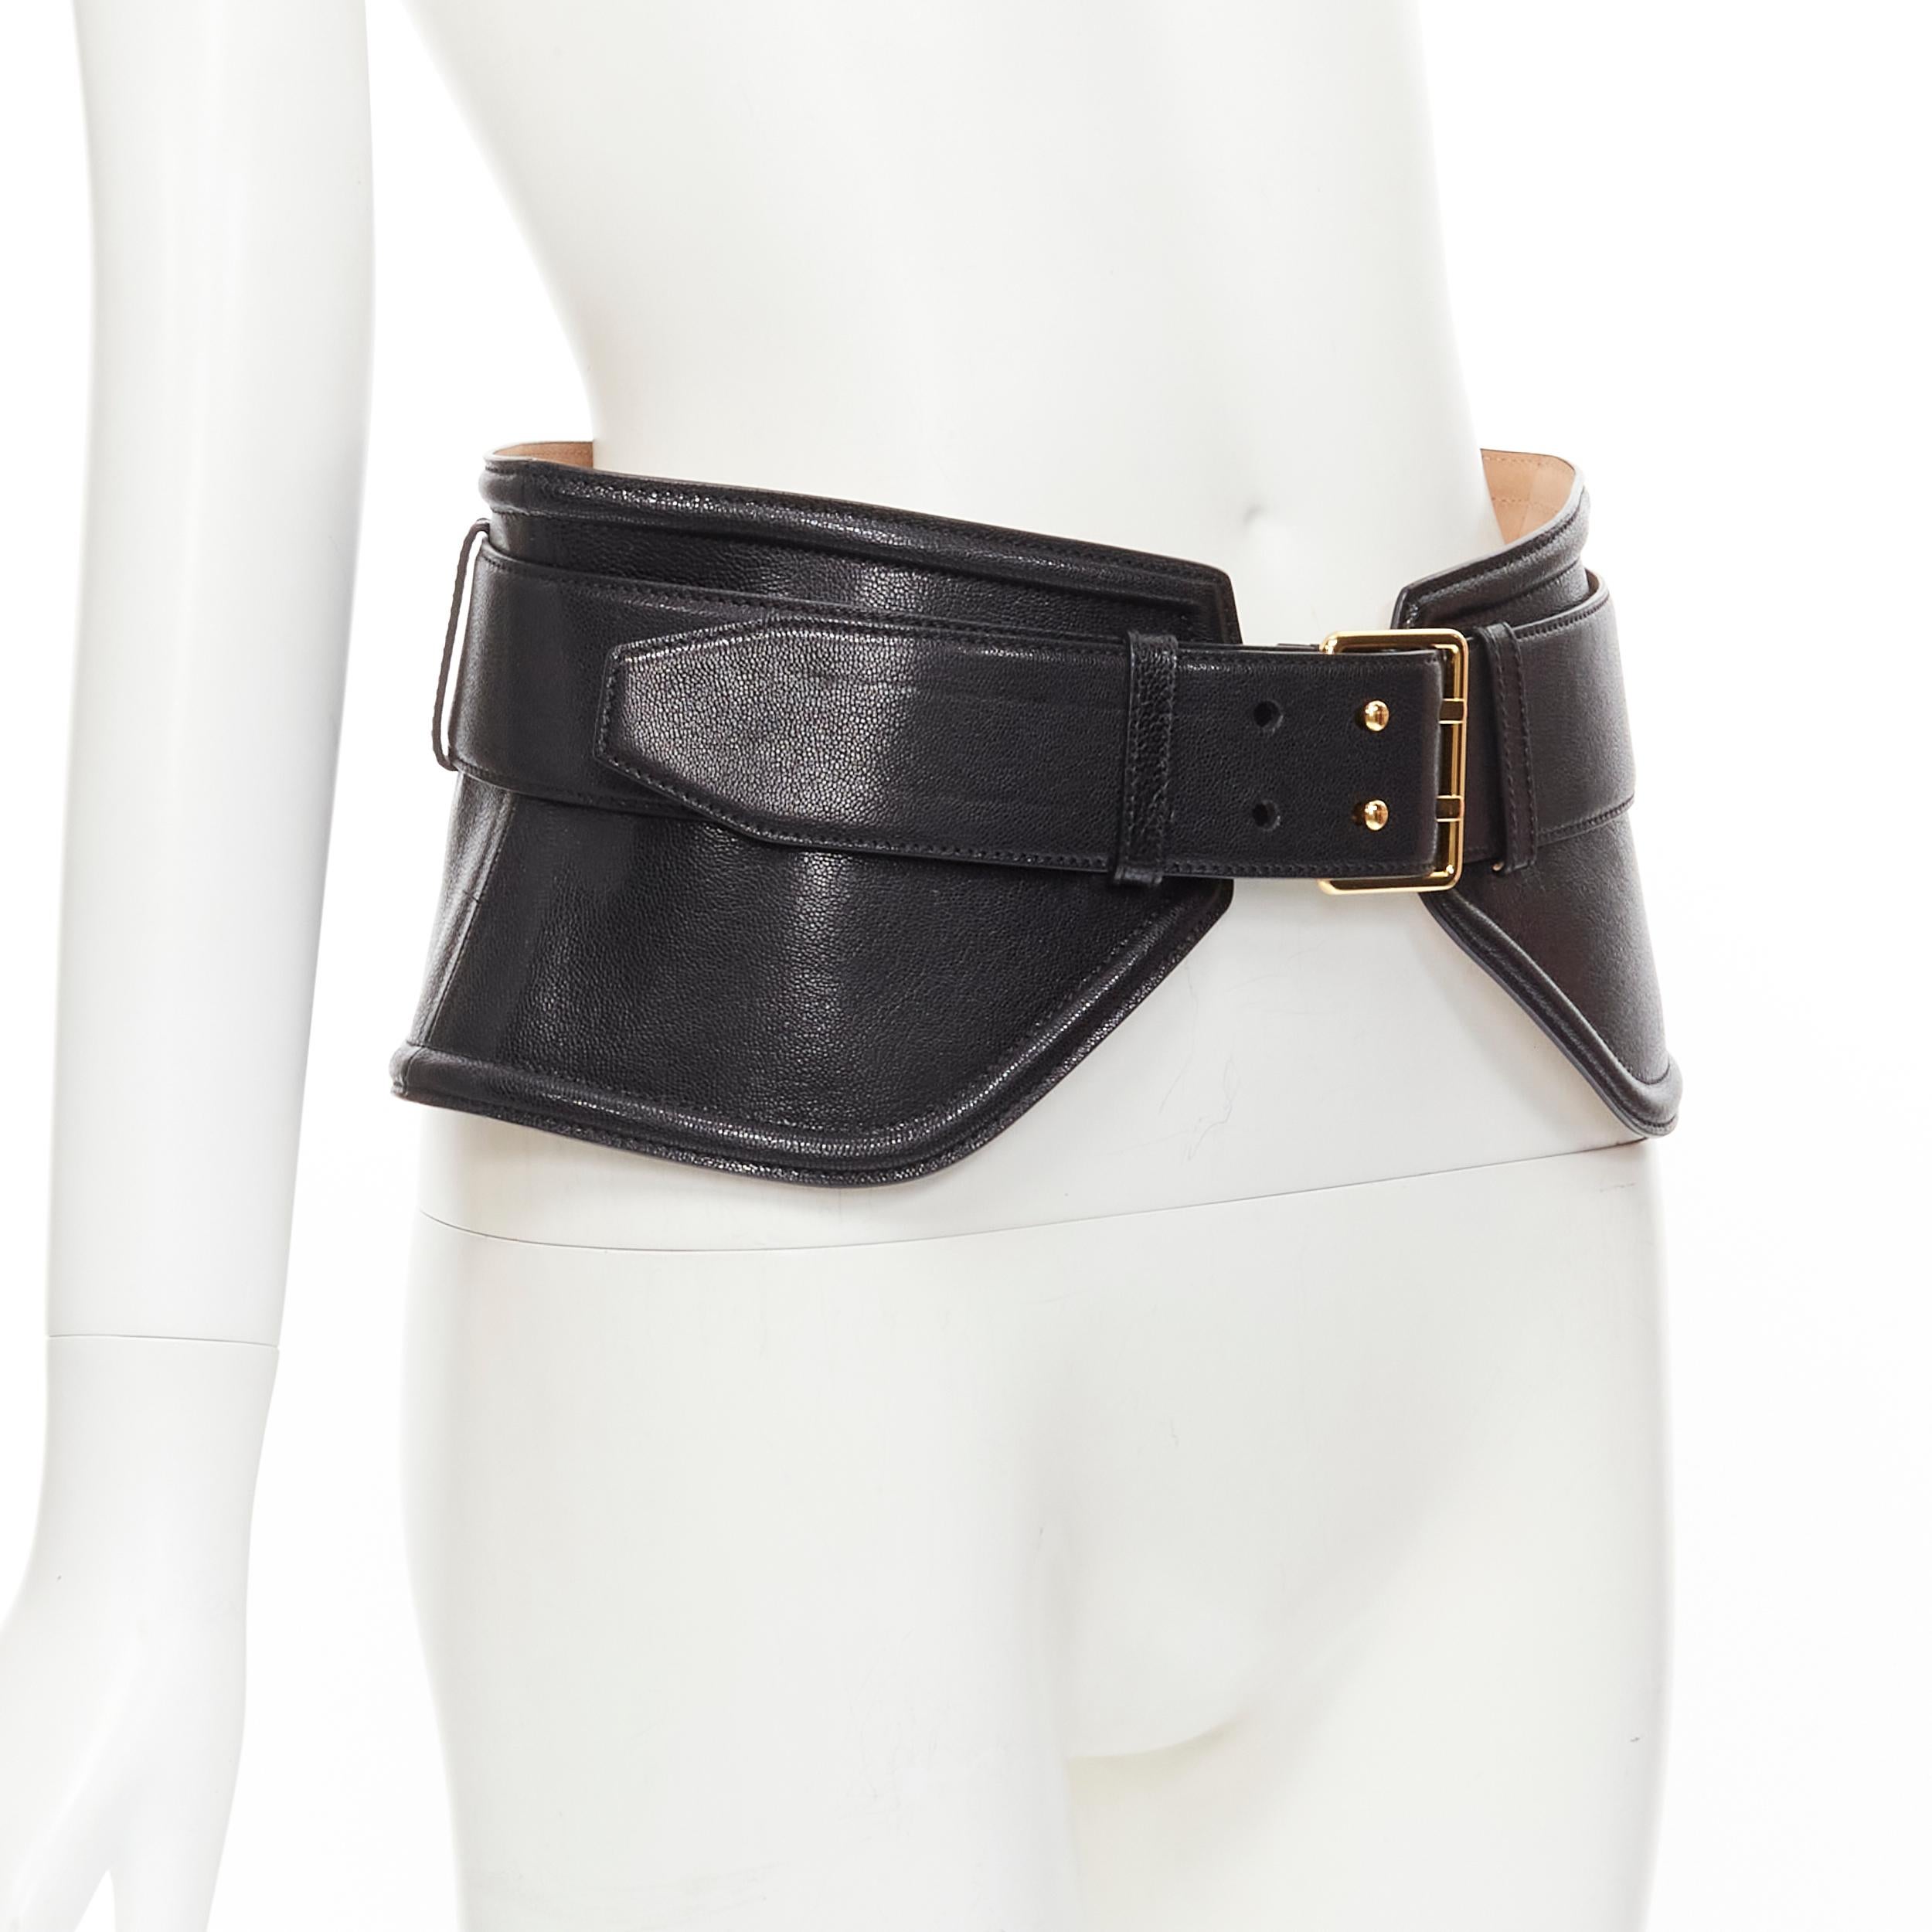 TOM FORD black genuine leather gold buckle peplum statement waist belt 80cm 32